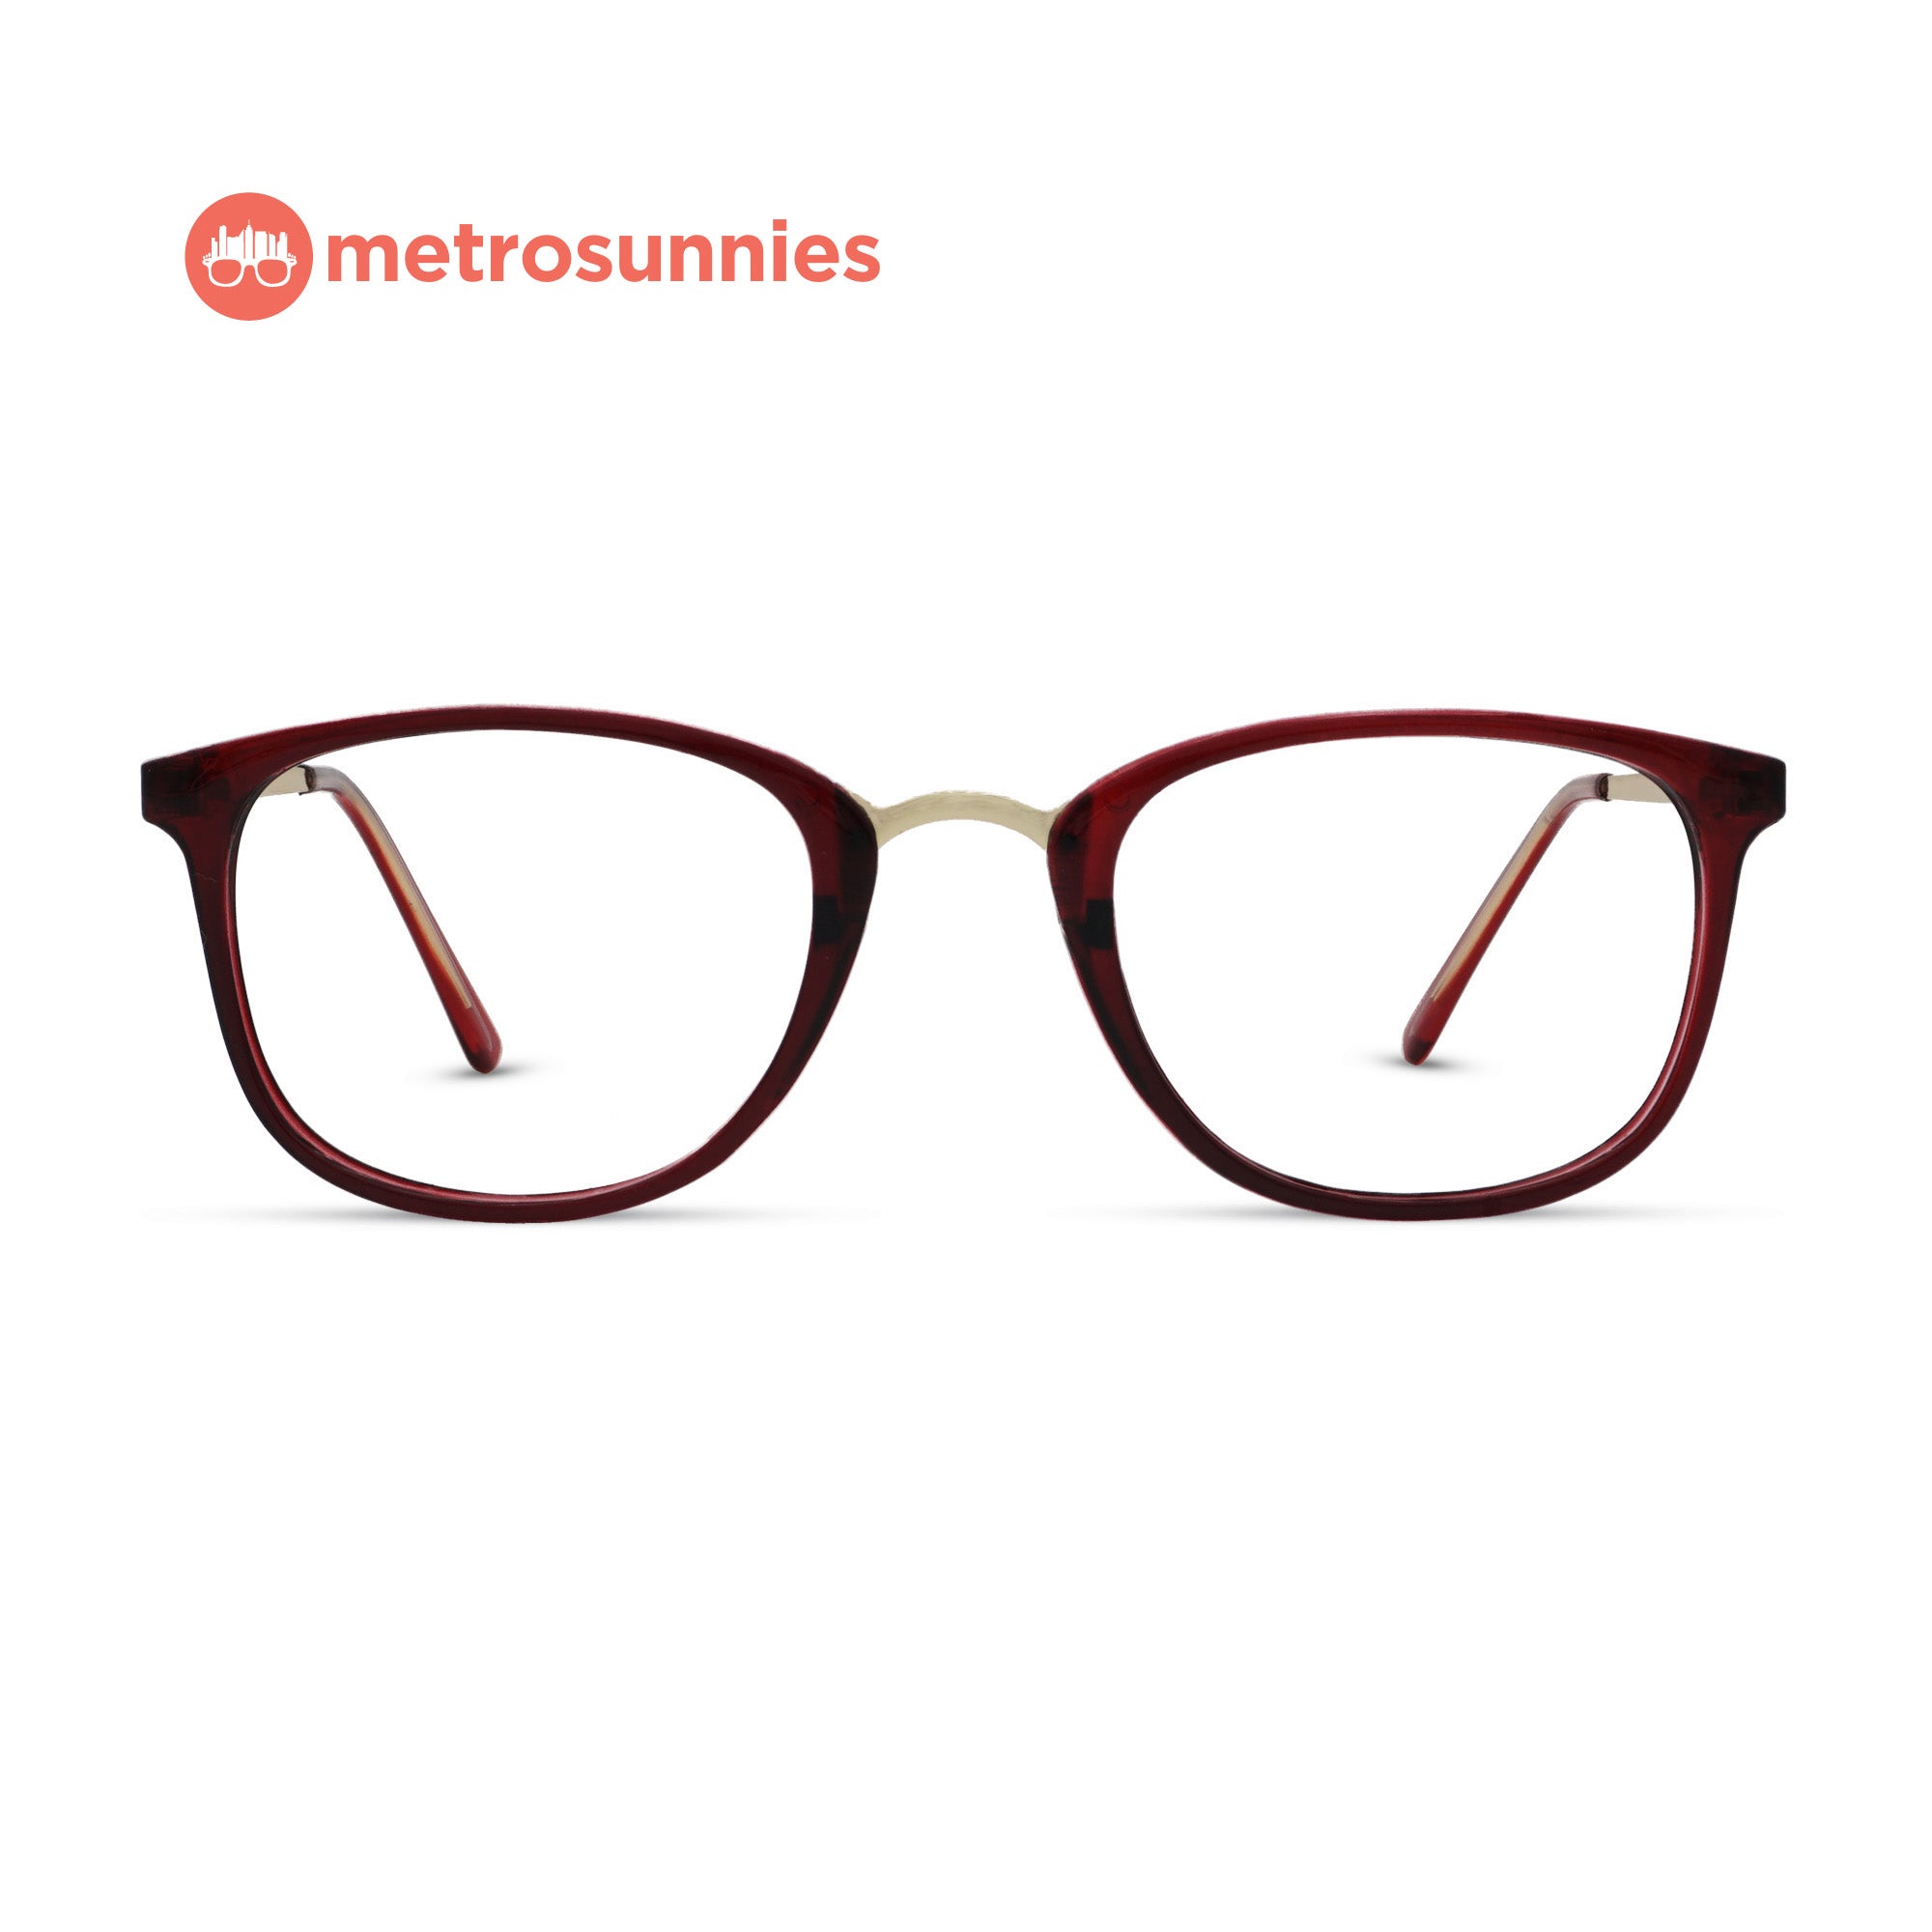 MetroSunnies River Specs (Red) / Replaceable Lens / Eyeglasses for Men and Women